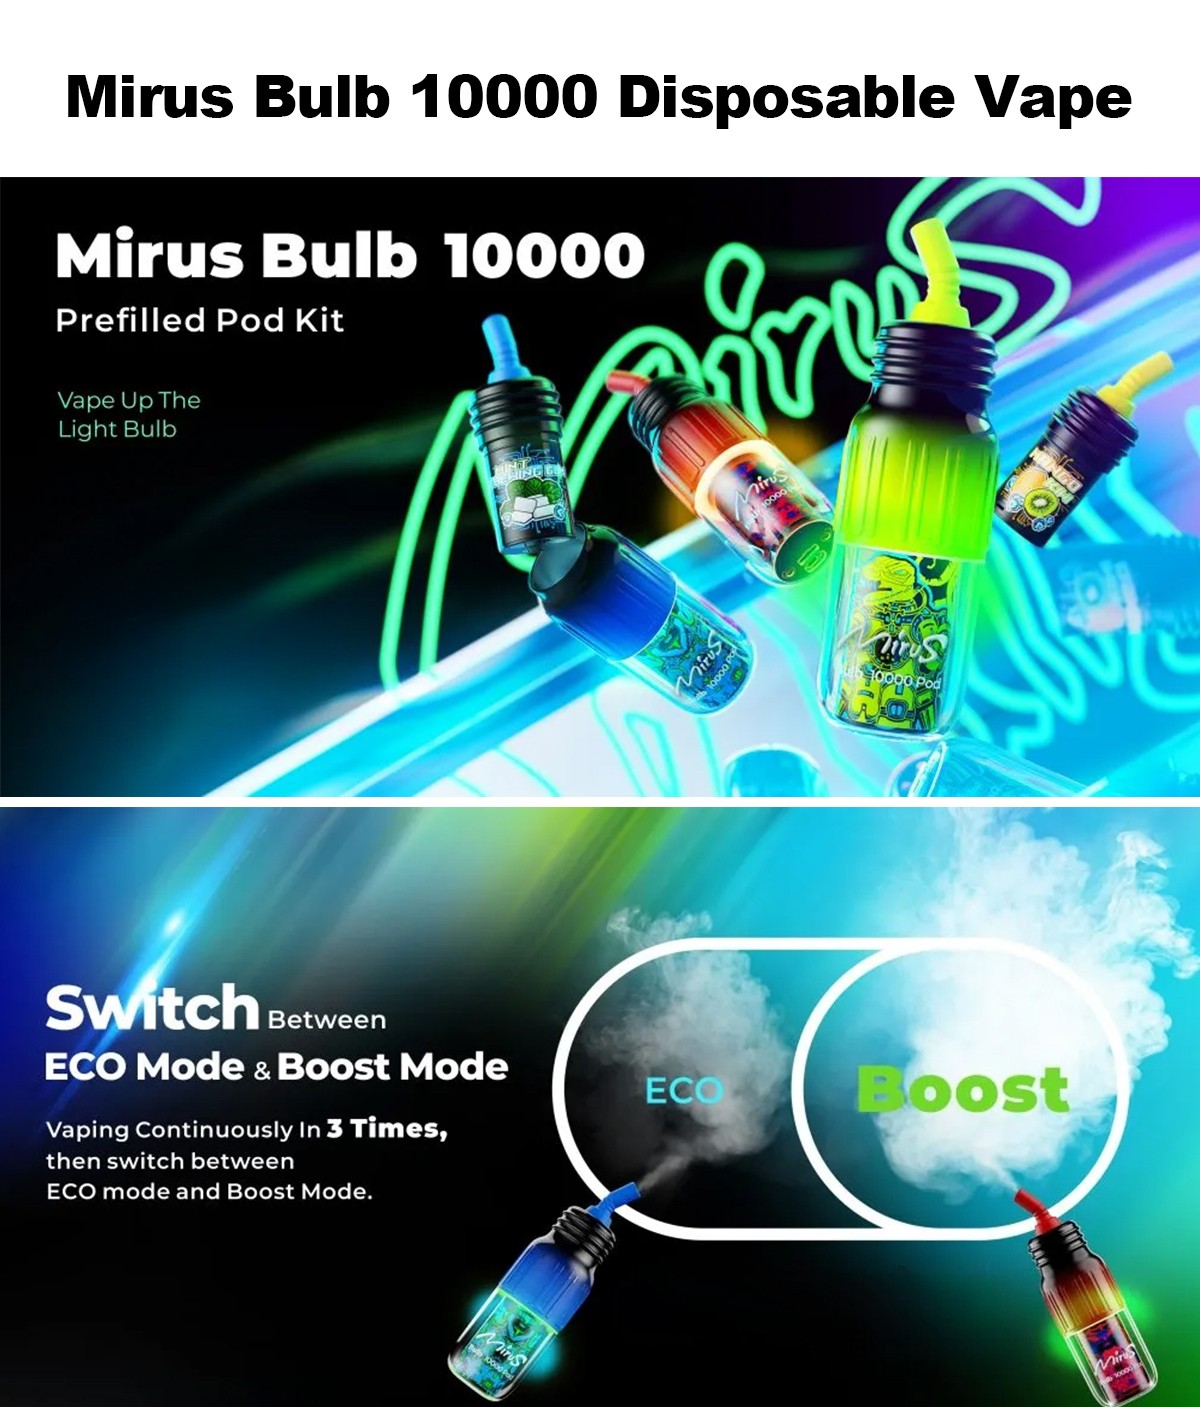 Mirus Bulb 10000 Disposable